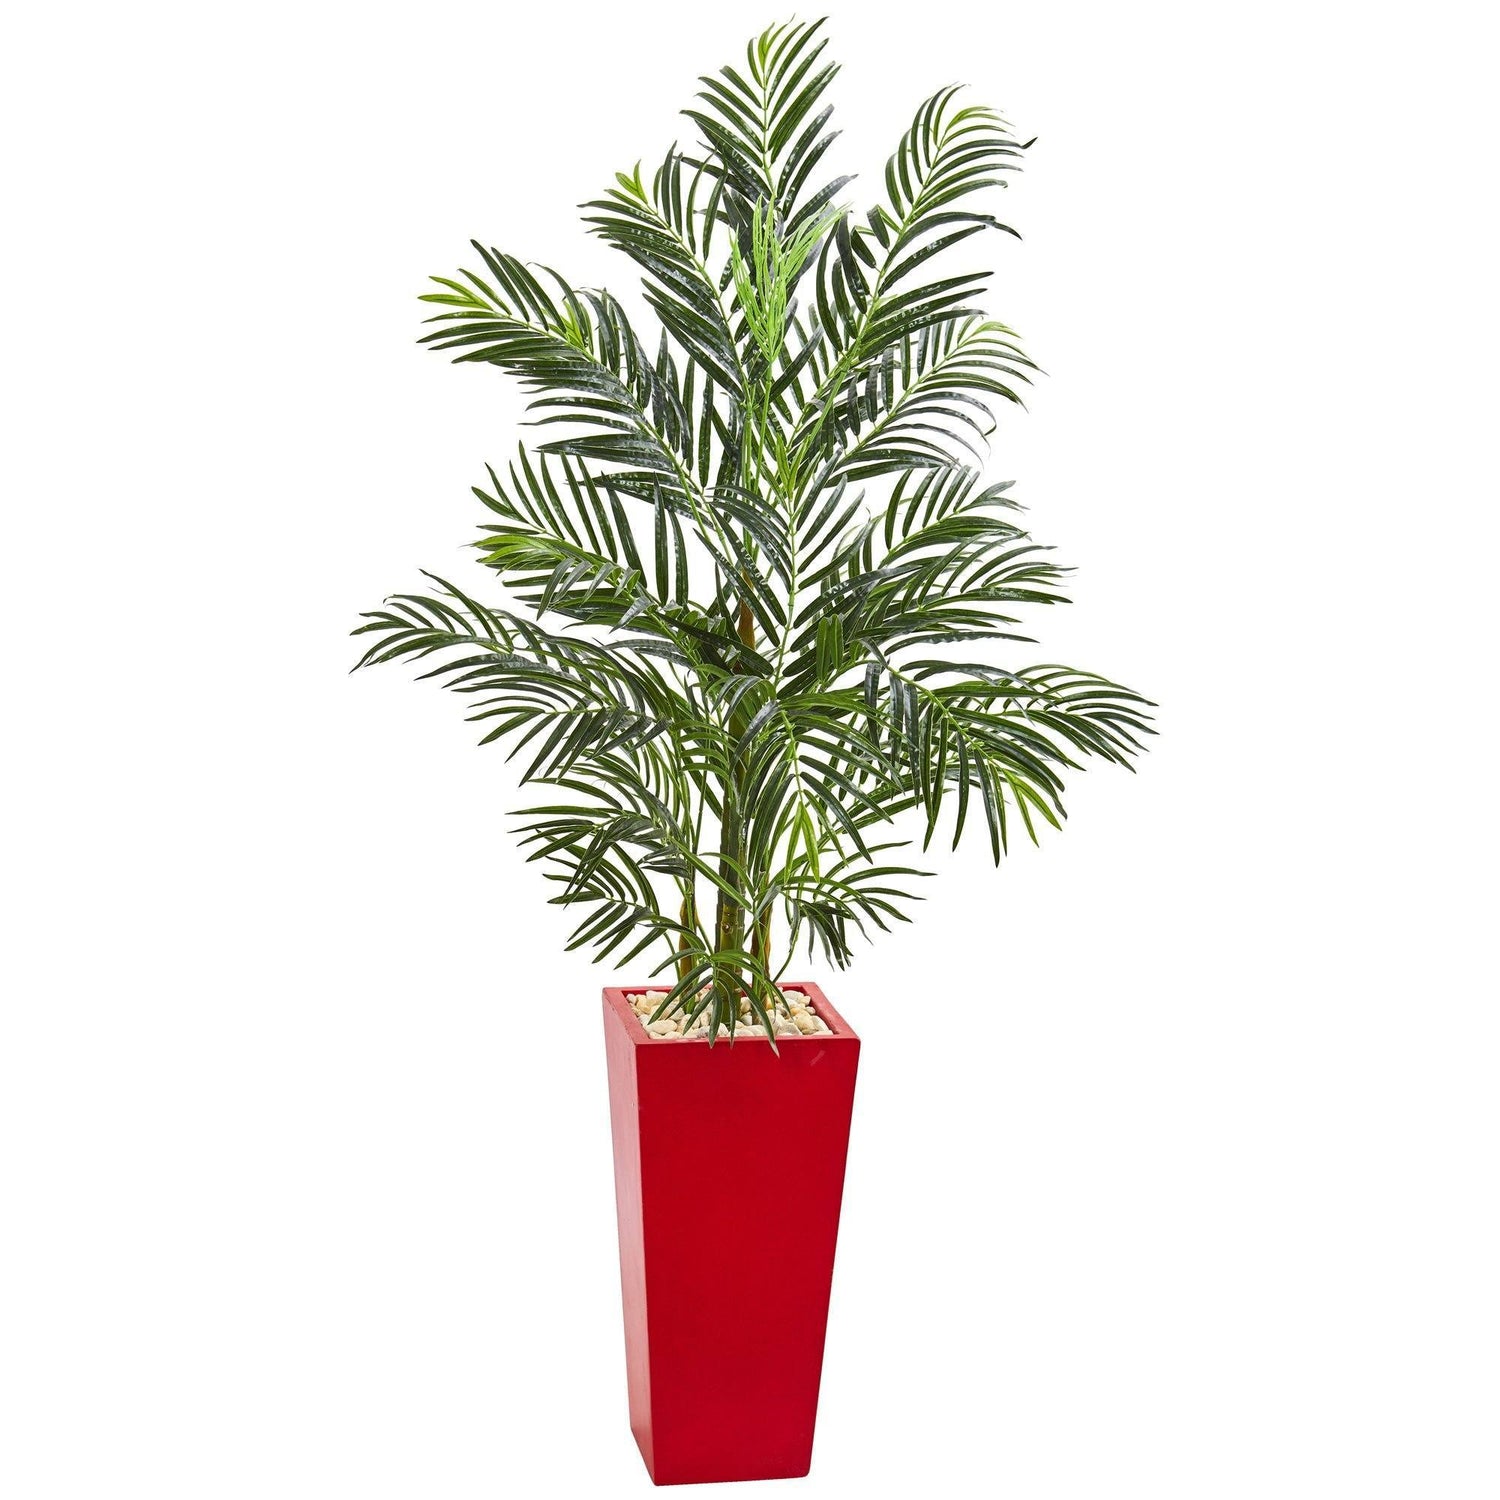 5’ Areca Palm Artificial Tree in Red Planter (Indoor/Outdoor)